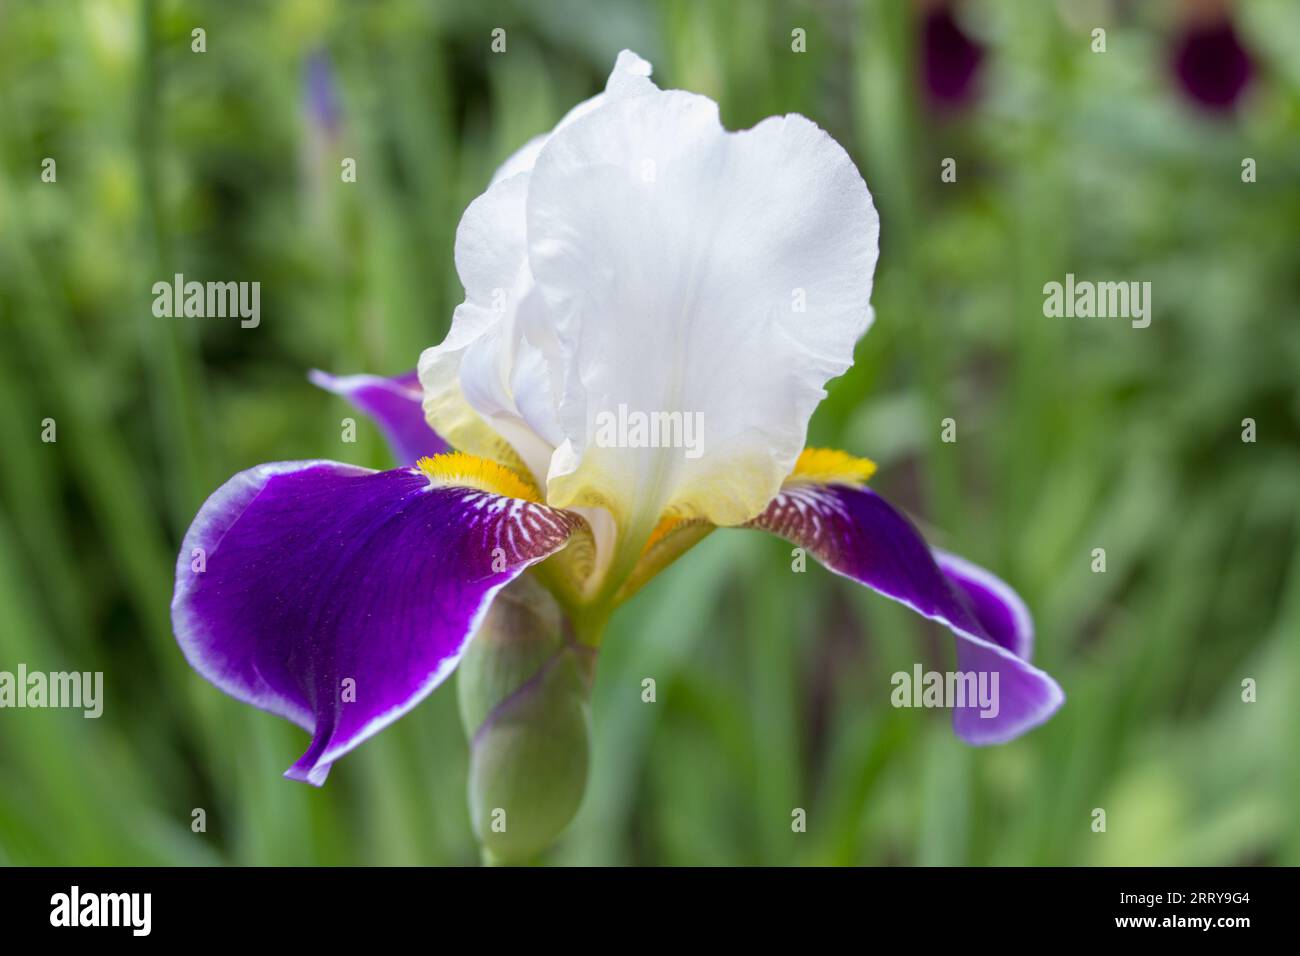 Tall bearded iris wabash blue and white flower Stock Photo